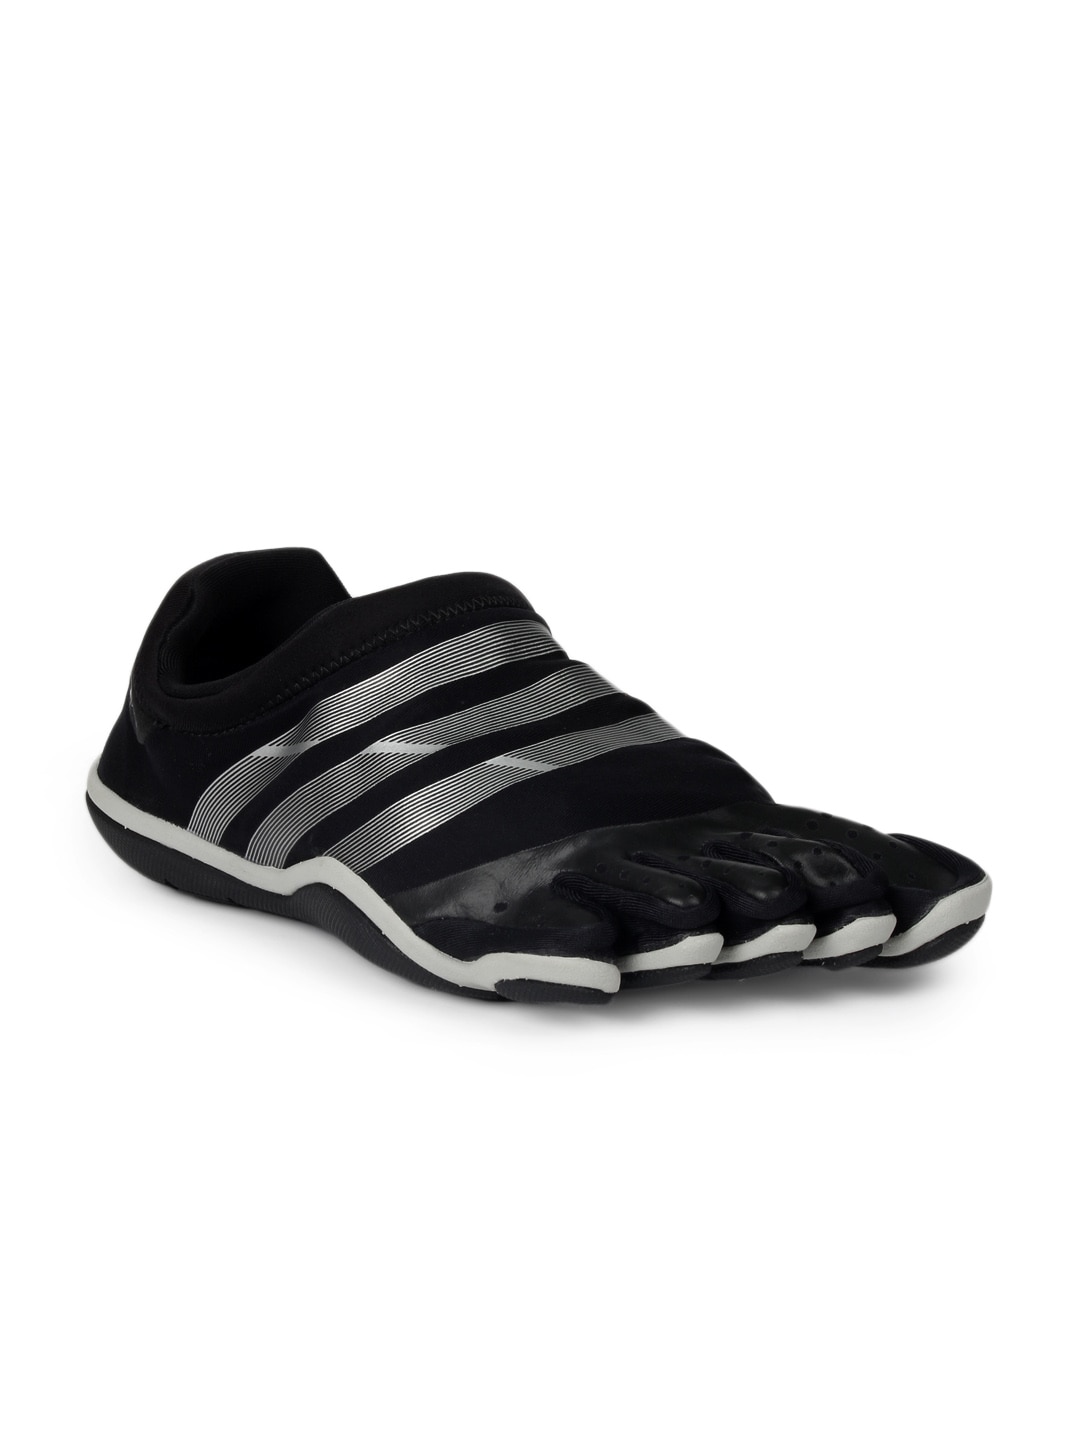 ADIDAS Men Black Adipure Sports Shoes